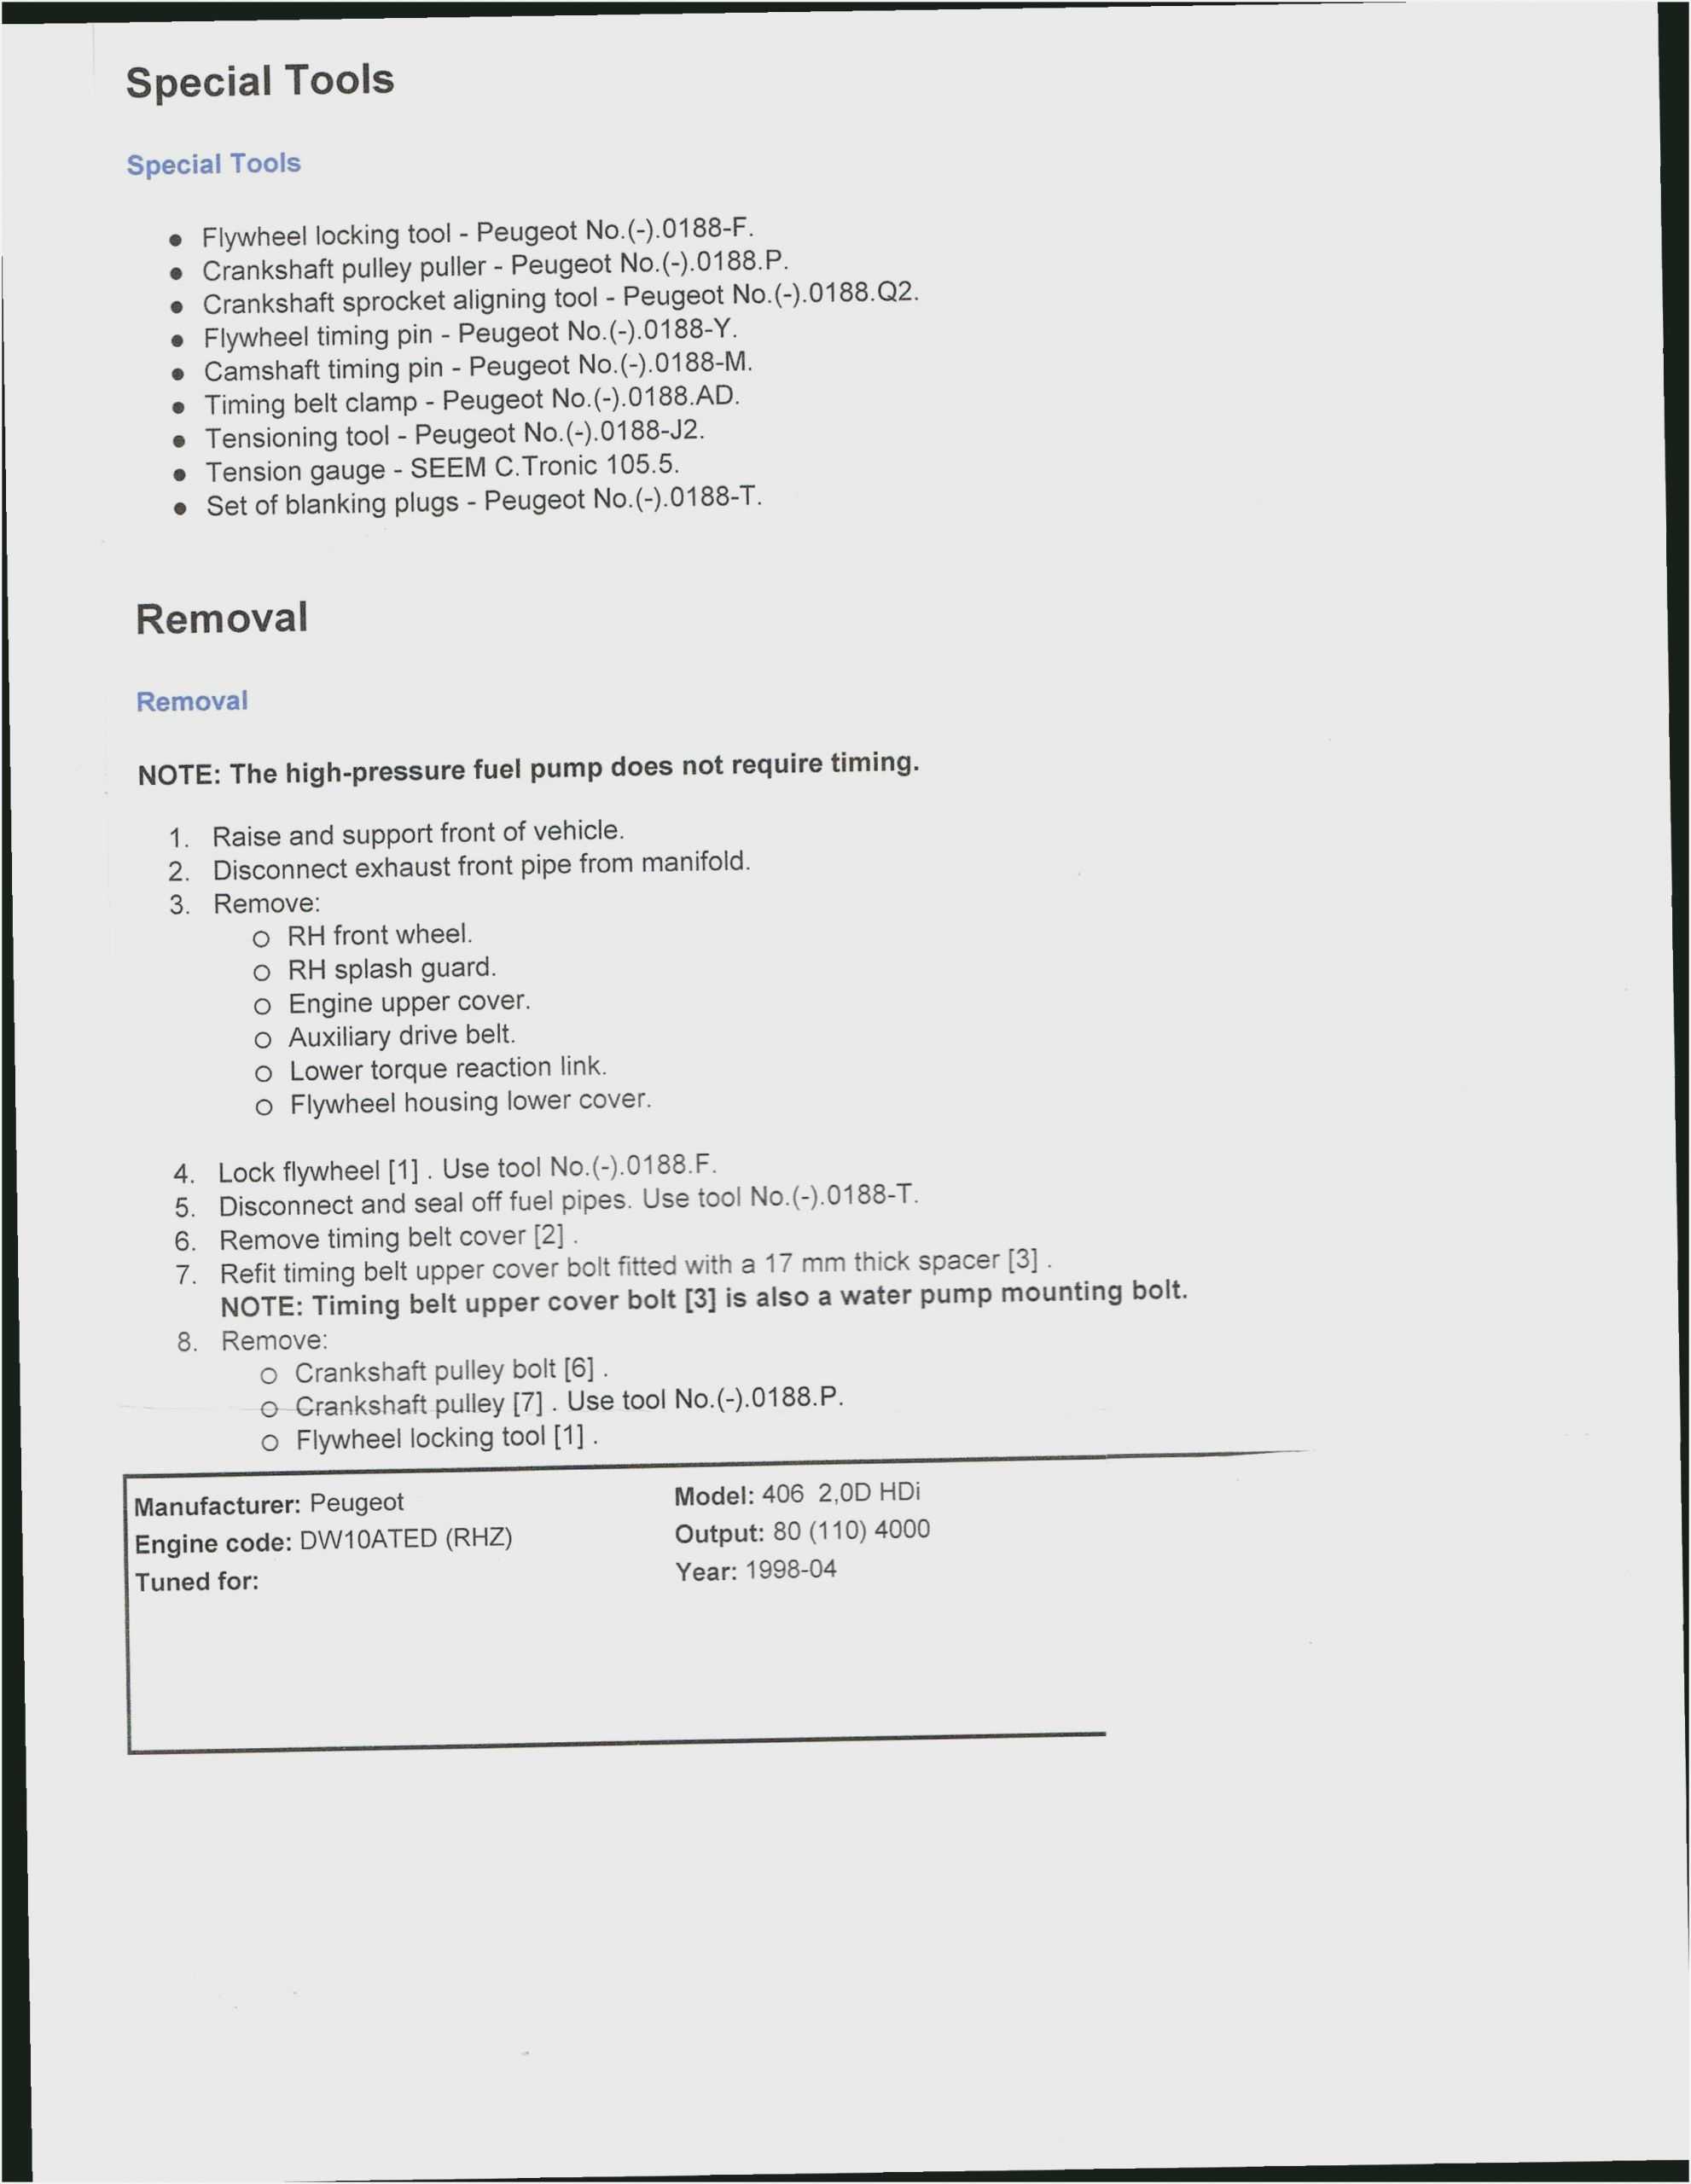 Microsoft Office Word 2007 Resume Builder – Resume : Resume Within Resume Templates Word 2007